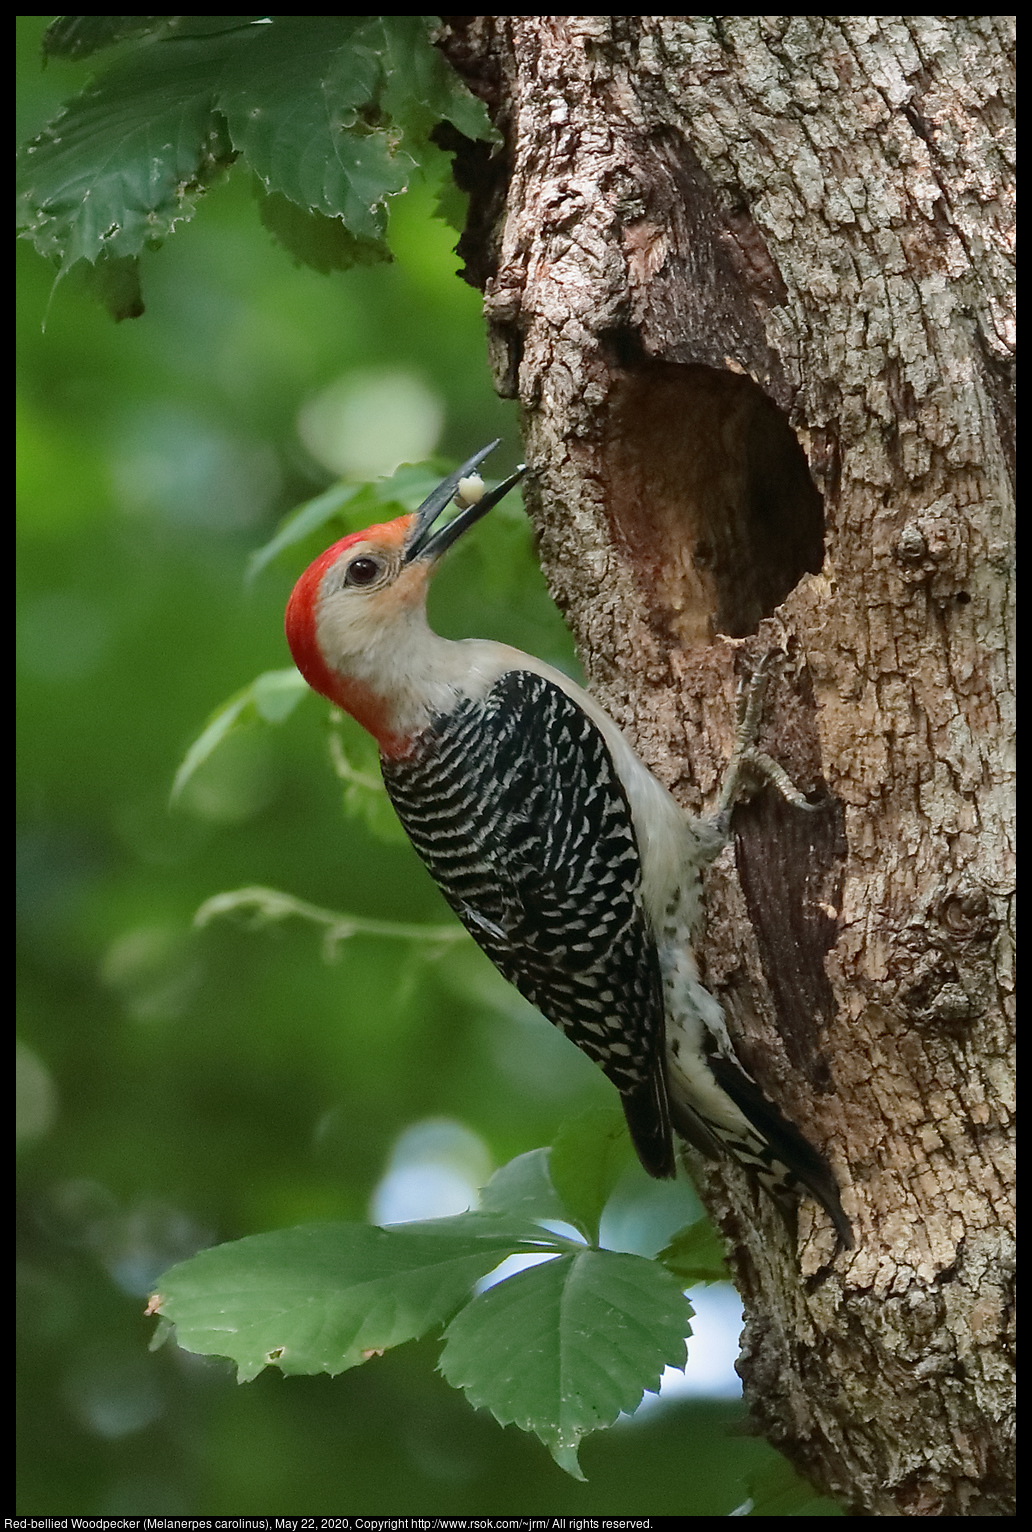 Red-bellied Woodpecker (Melanerpes carolinus), May 22, 2020